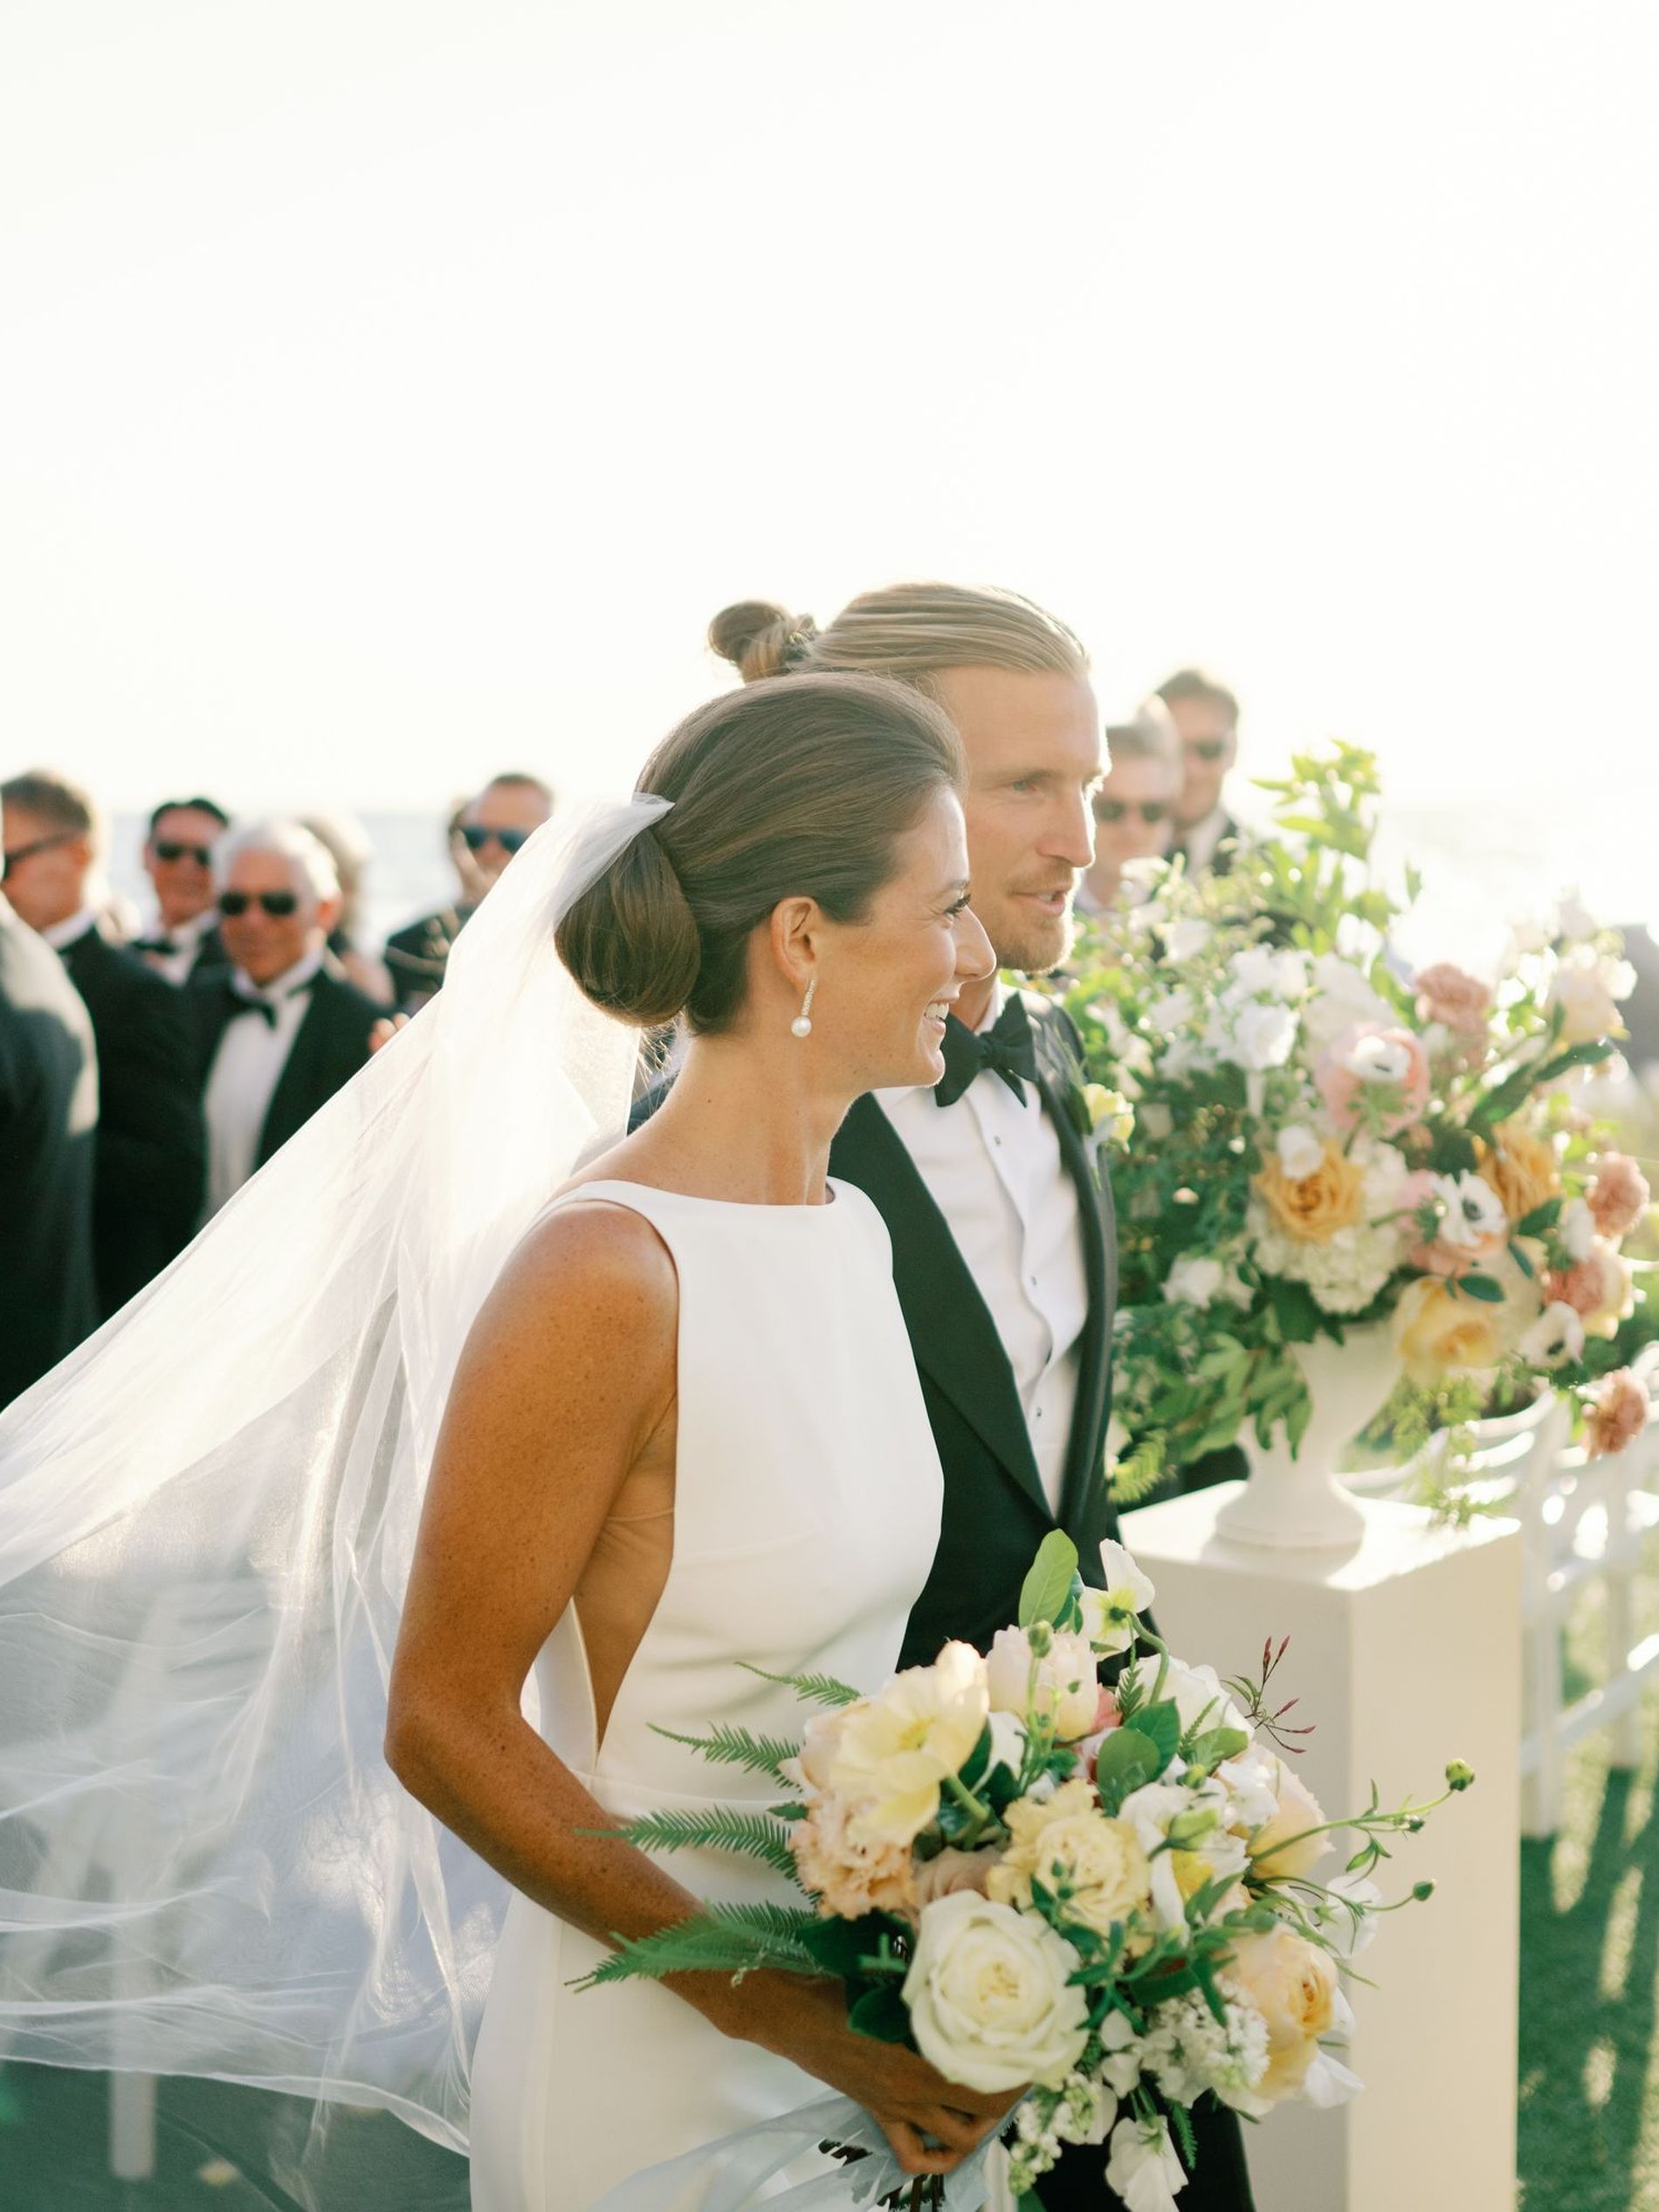 Perri Rothenberg and Robert Moldén wedding